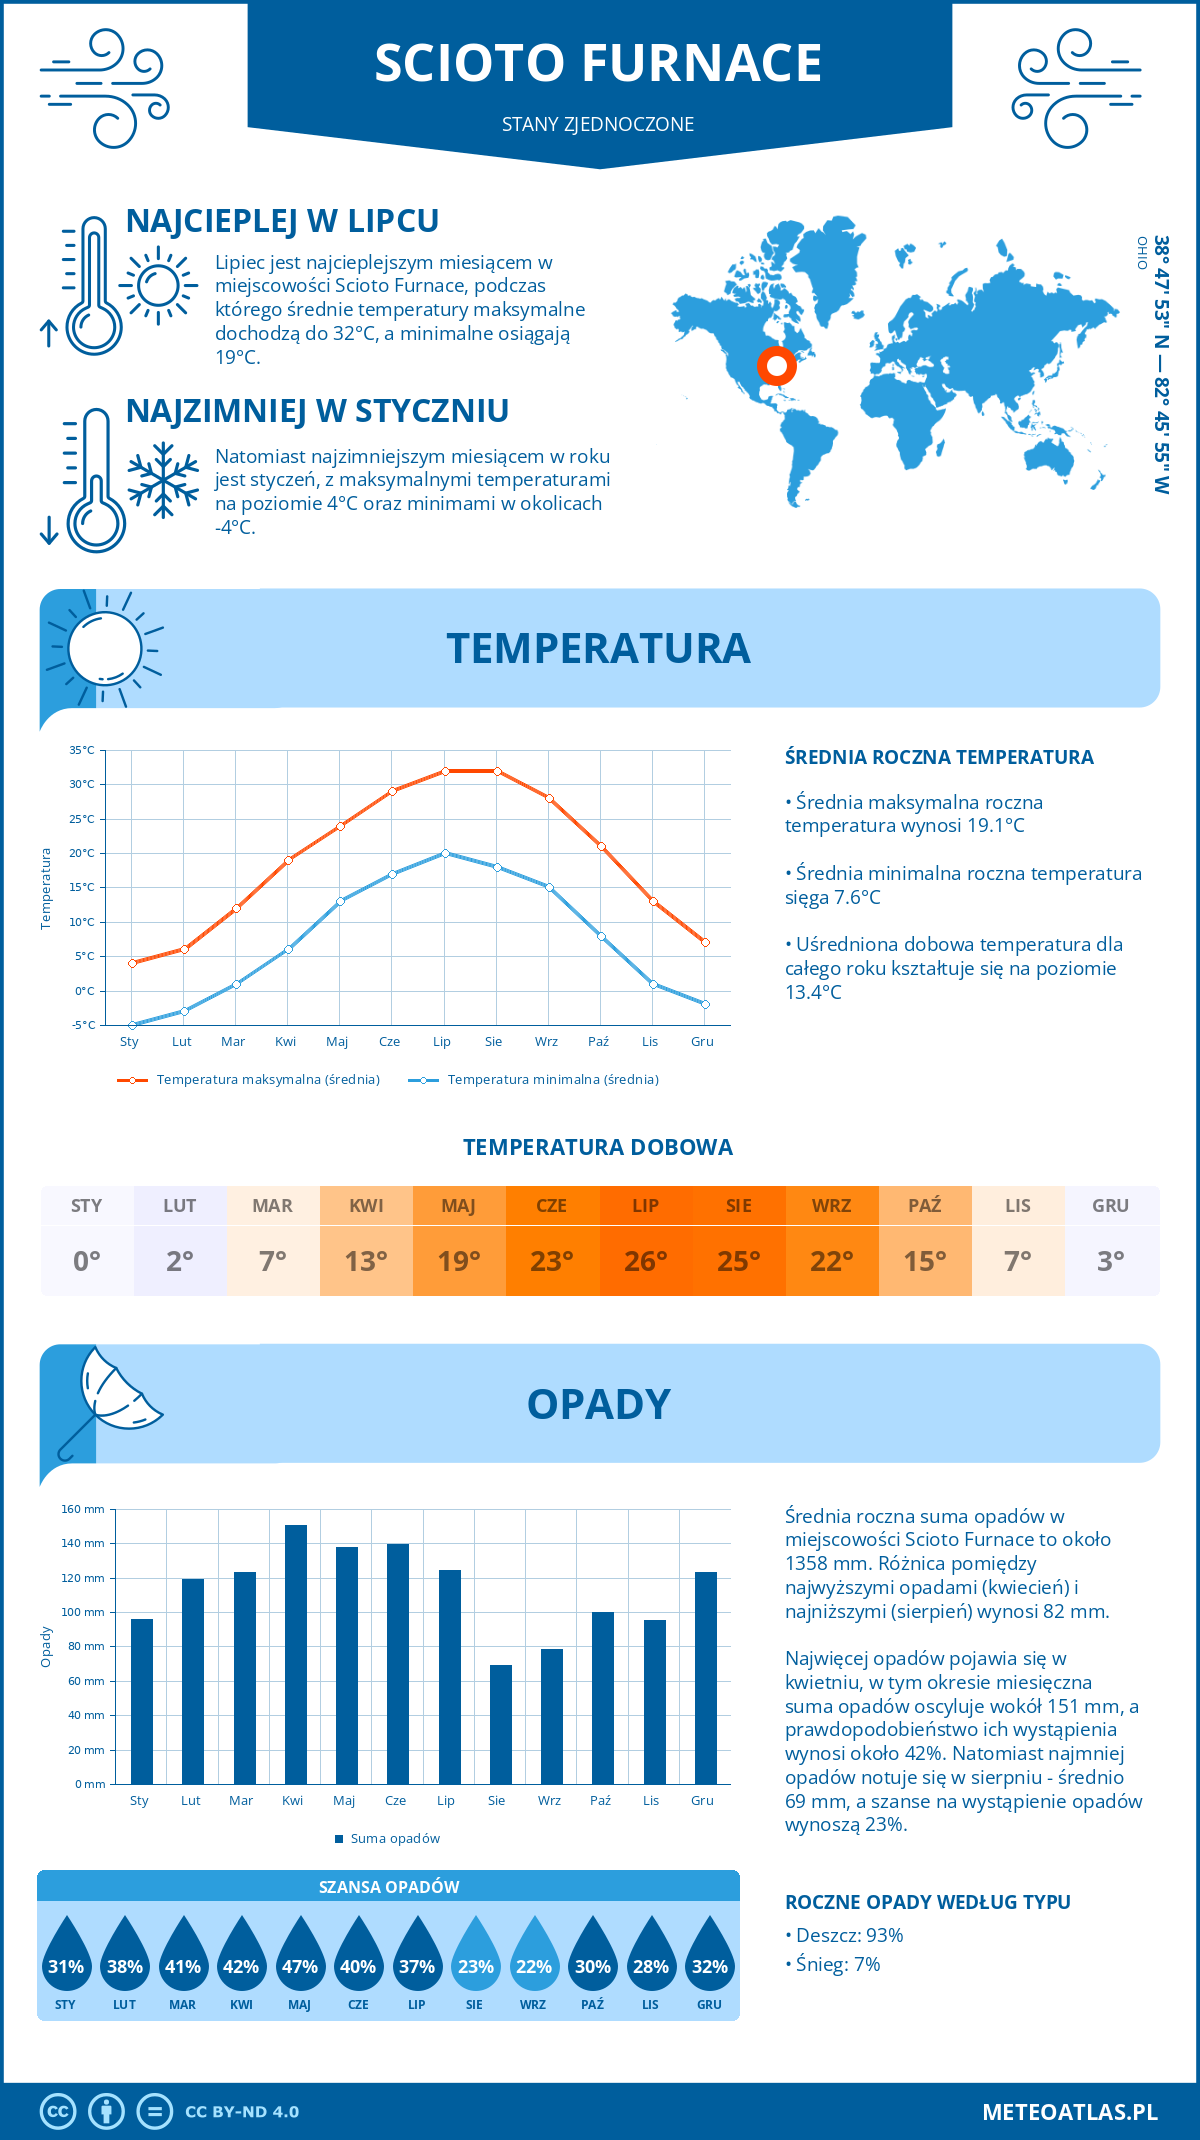 Pogoda Scioto Furnace (Stany Zjednoczone). Temperatura oraz opady.